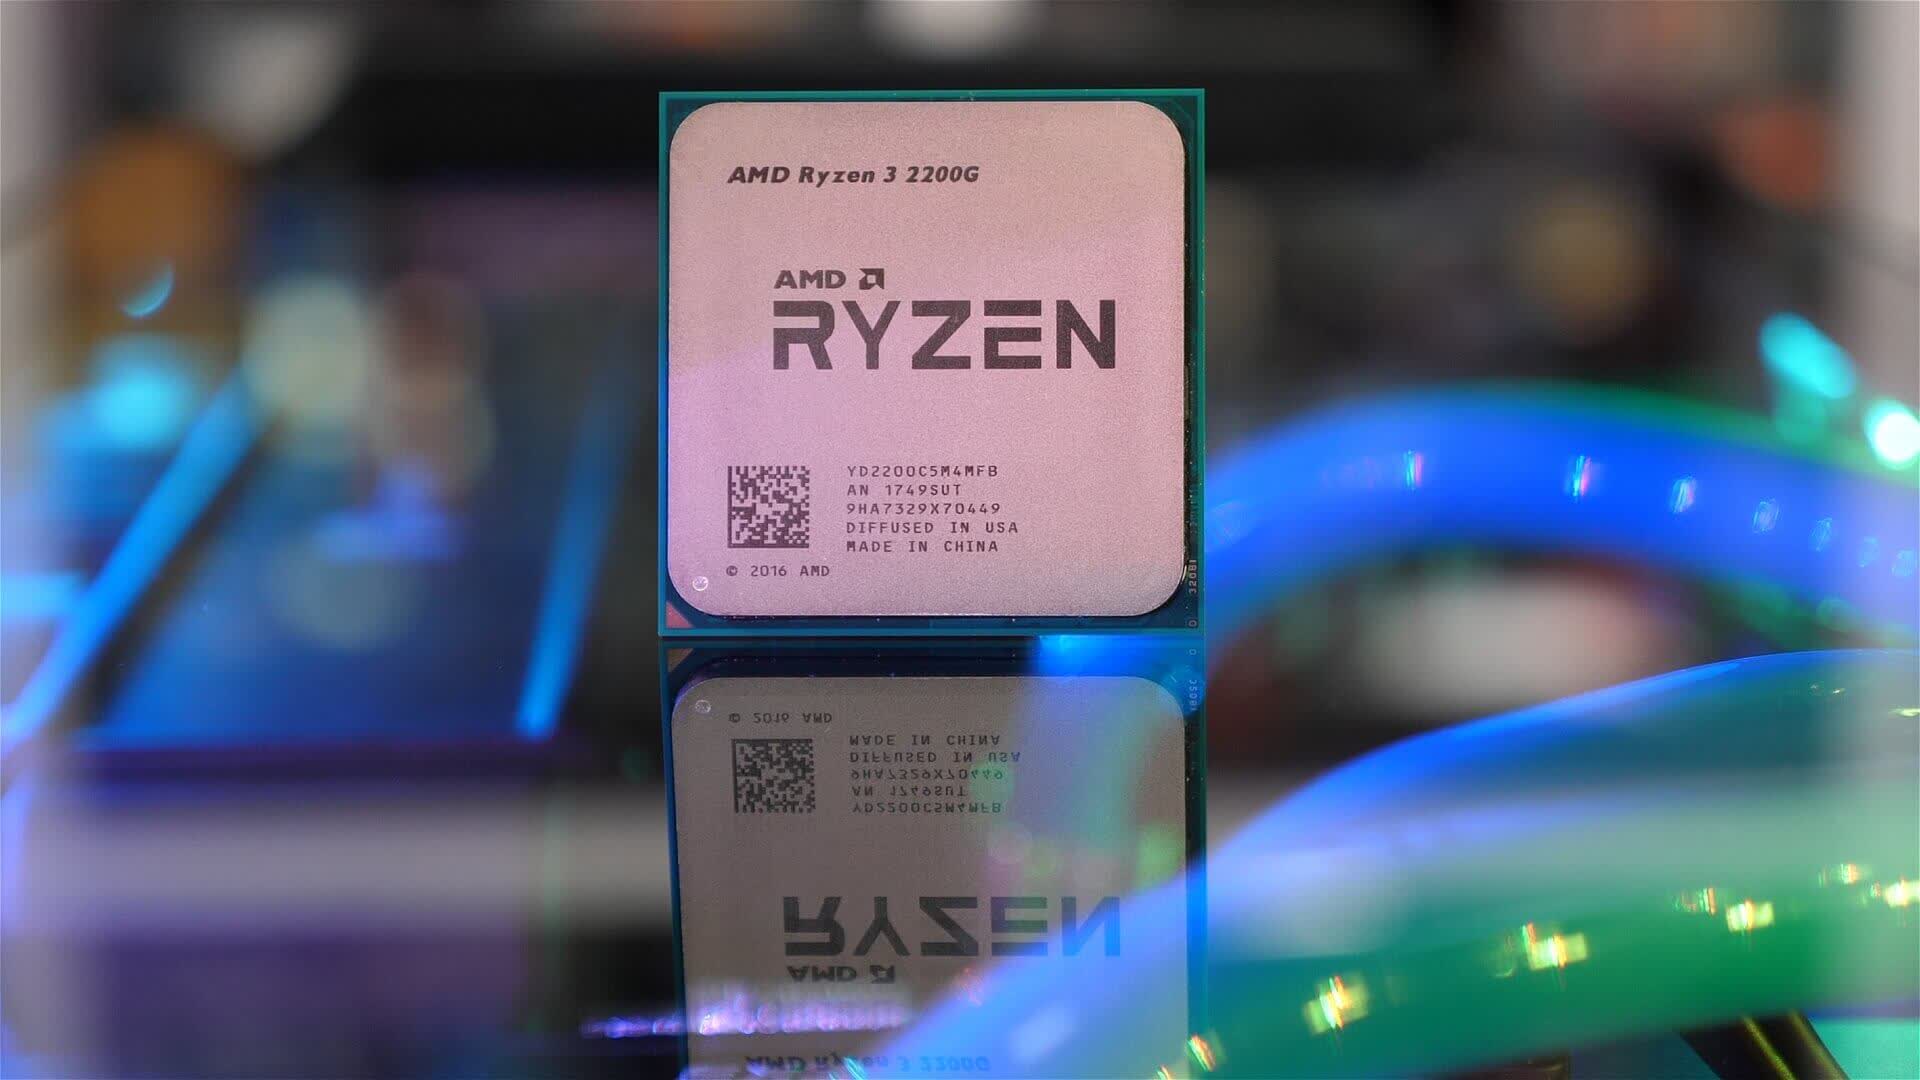 AMD Ryzen 3 2200G Reviews and Ratings - TechSpot